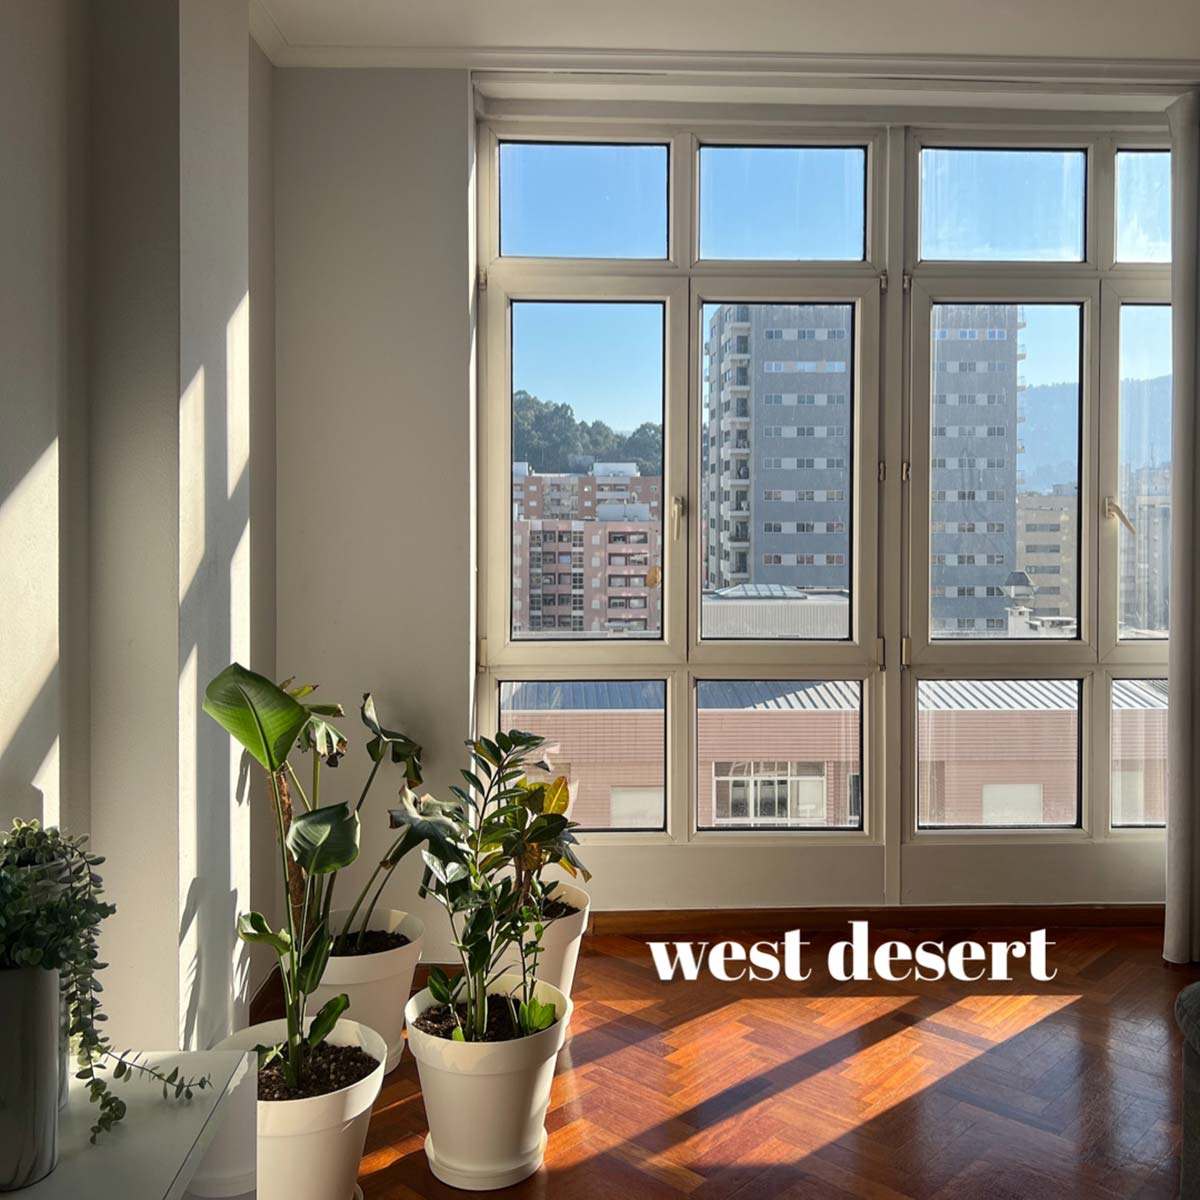 West desert by Tonester